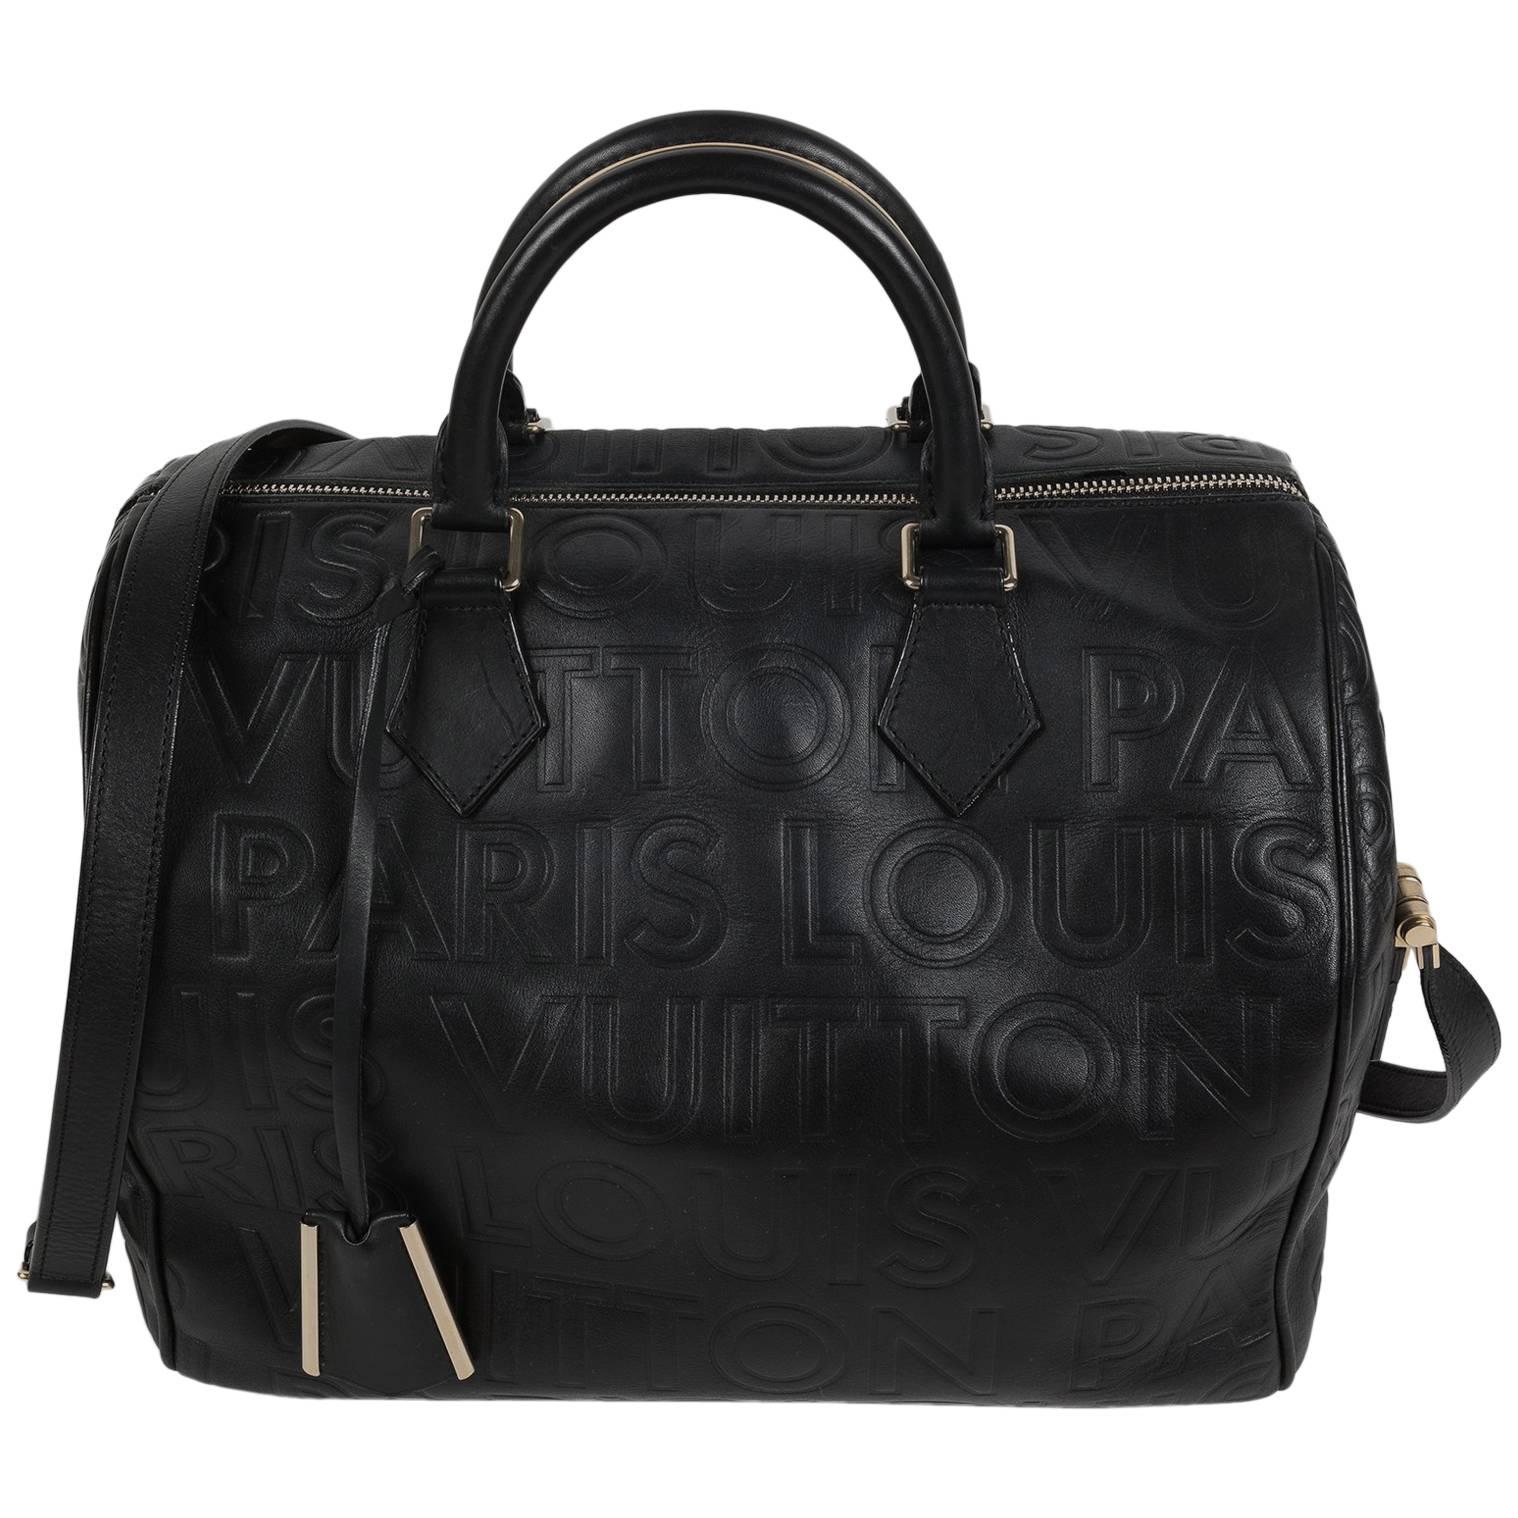 2008 Louis Vuitton Speedy Bag Limited Edition